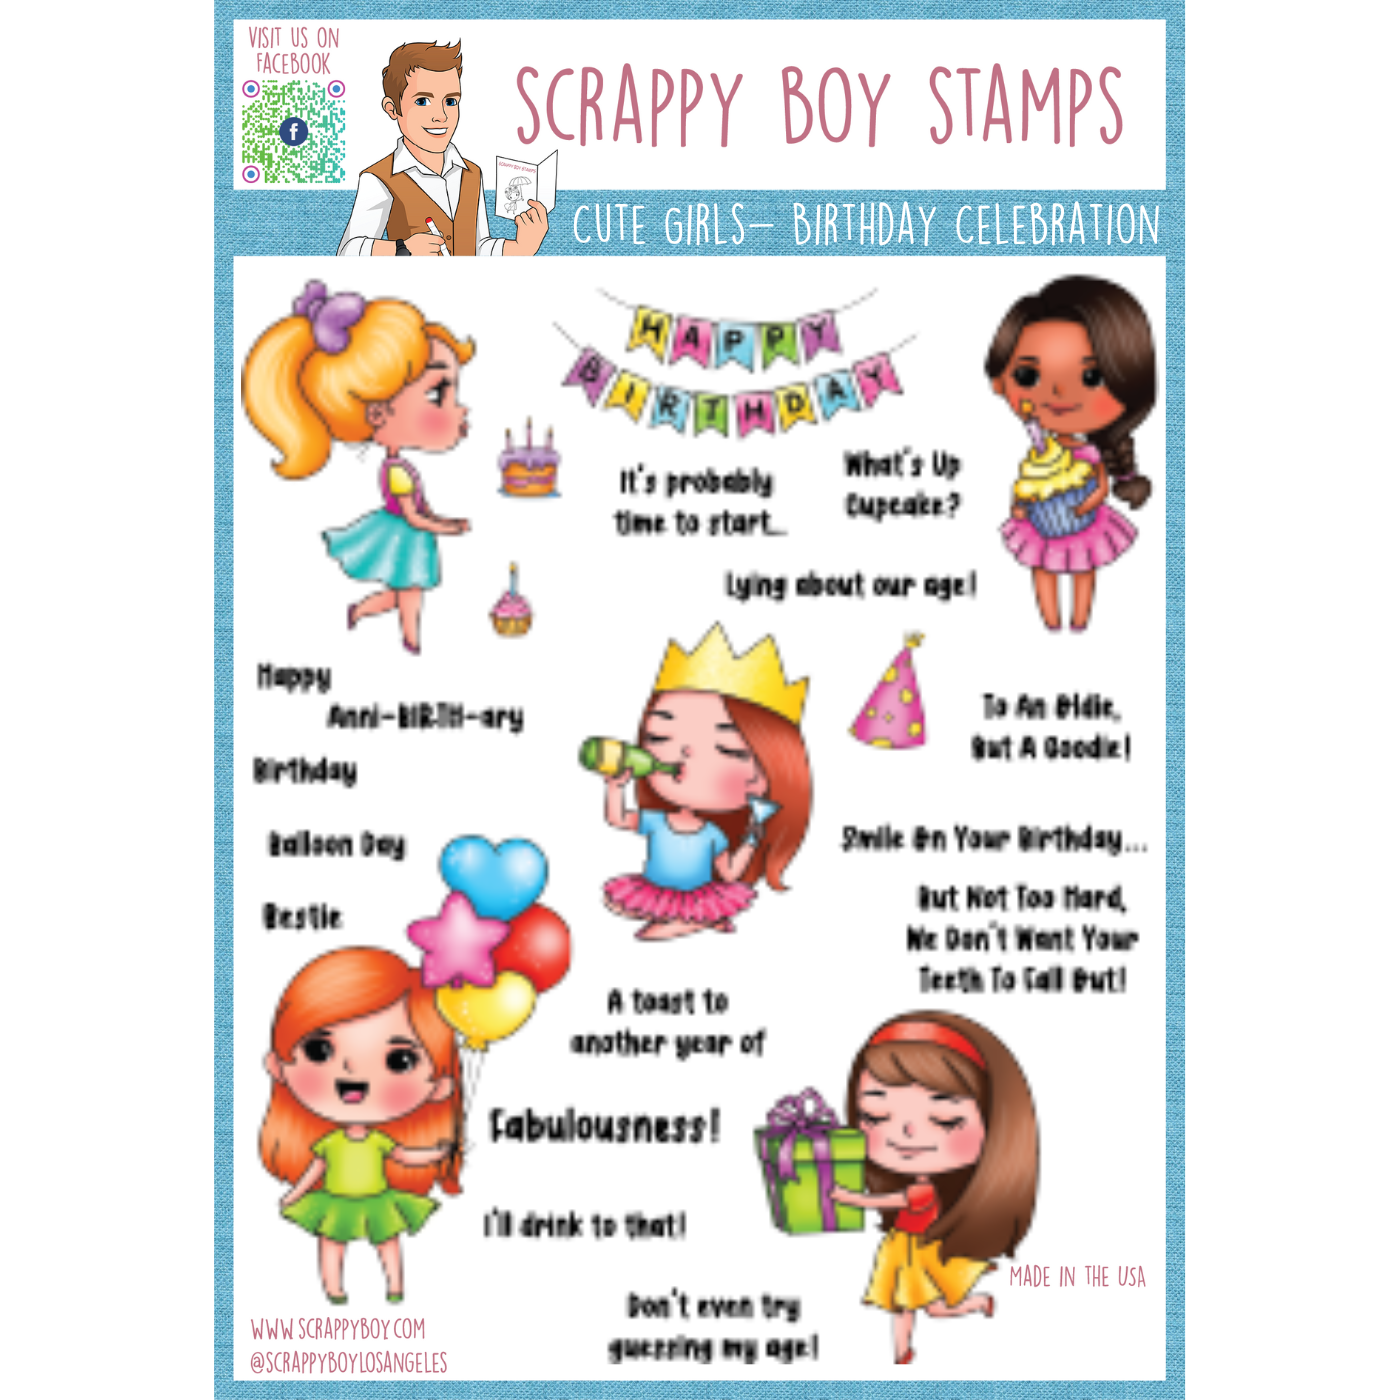 
                  
                    Bundle - Cute Girls Birthday Celebration Stamp & Outline Dies scrappyboystamps
                  
                